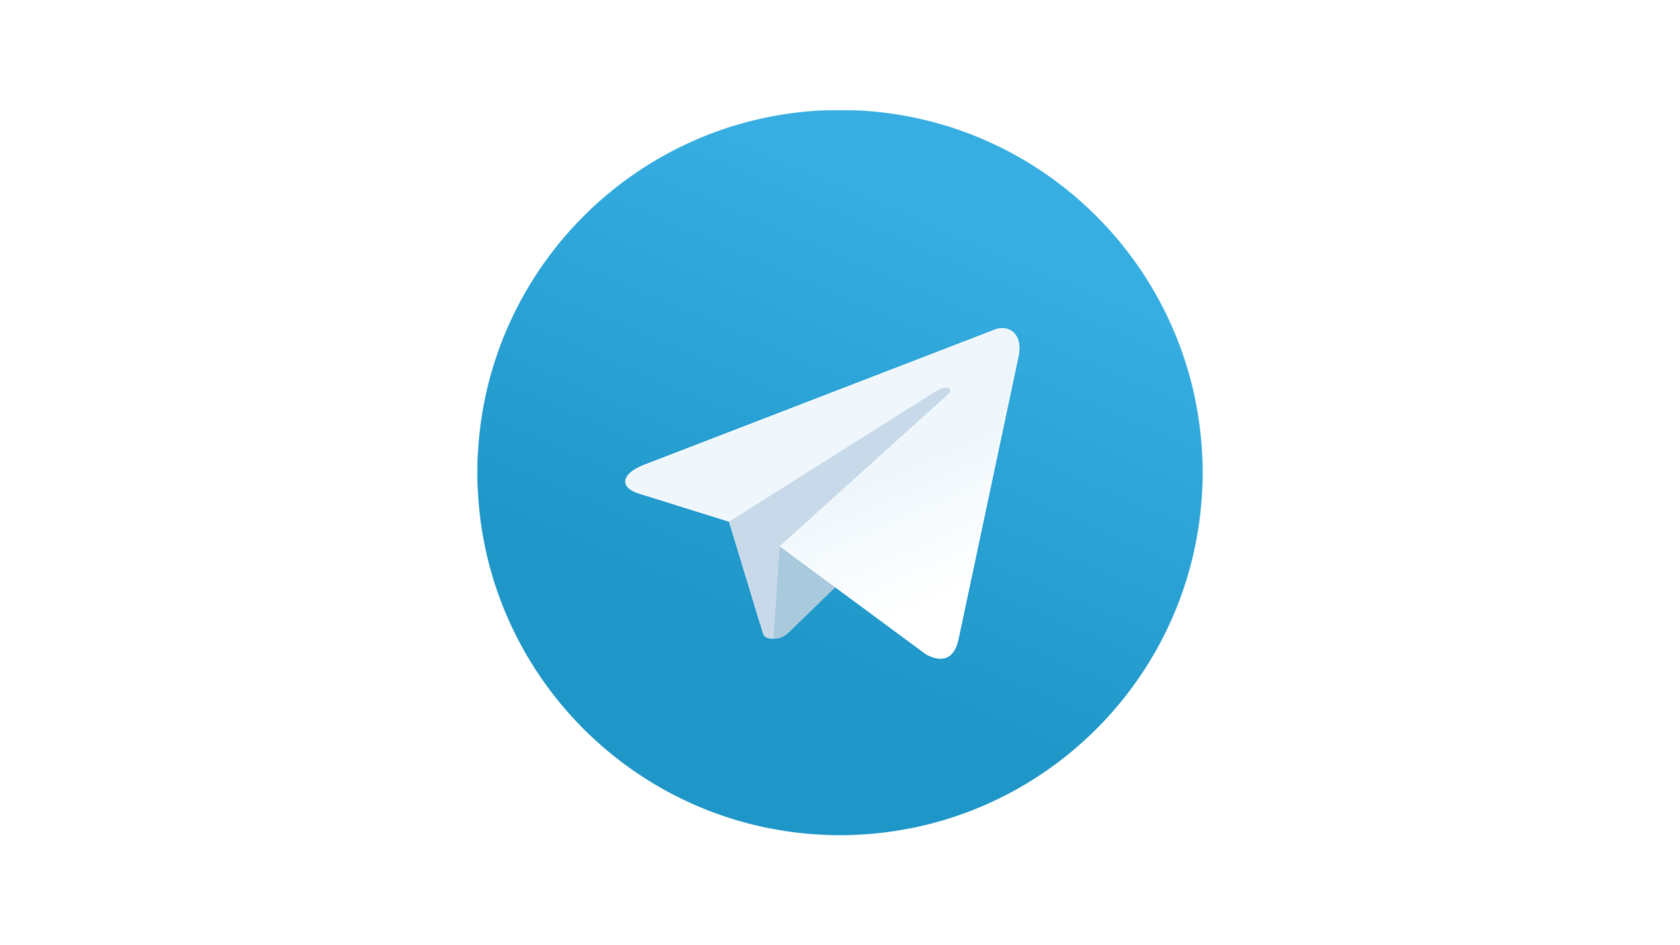 Png формат в телеграмме. Телеграмм. Иконка телеграмм. Пиктограмма телеграмм. Логотип телеграм на прозрачном фоне.